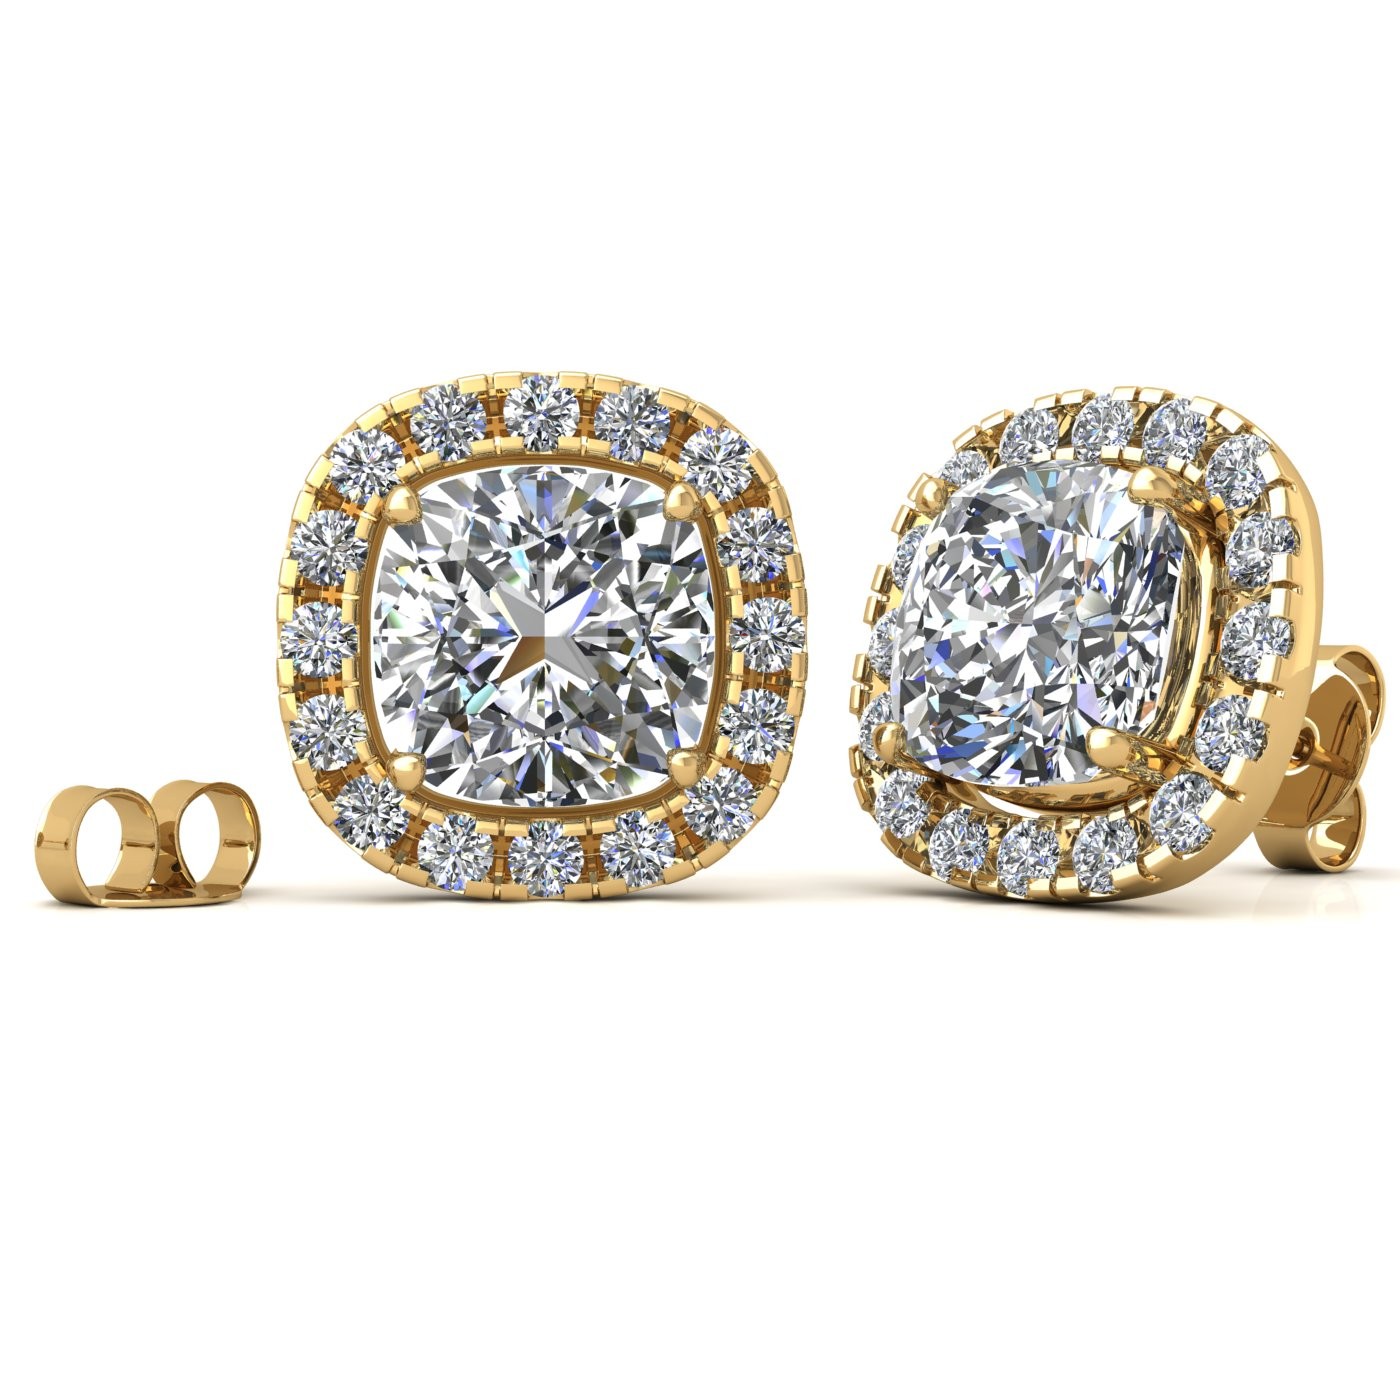 18k yellow gold  2,5 ct each (5,0 tcw) 4 prongs cushion shape diamond earrings with diamond pavÉ set halo Photos & images